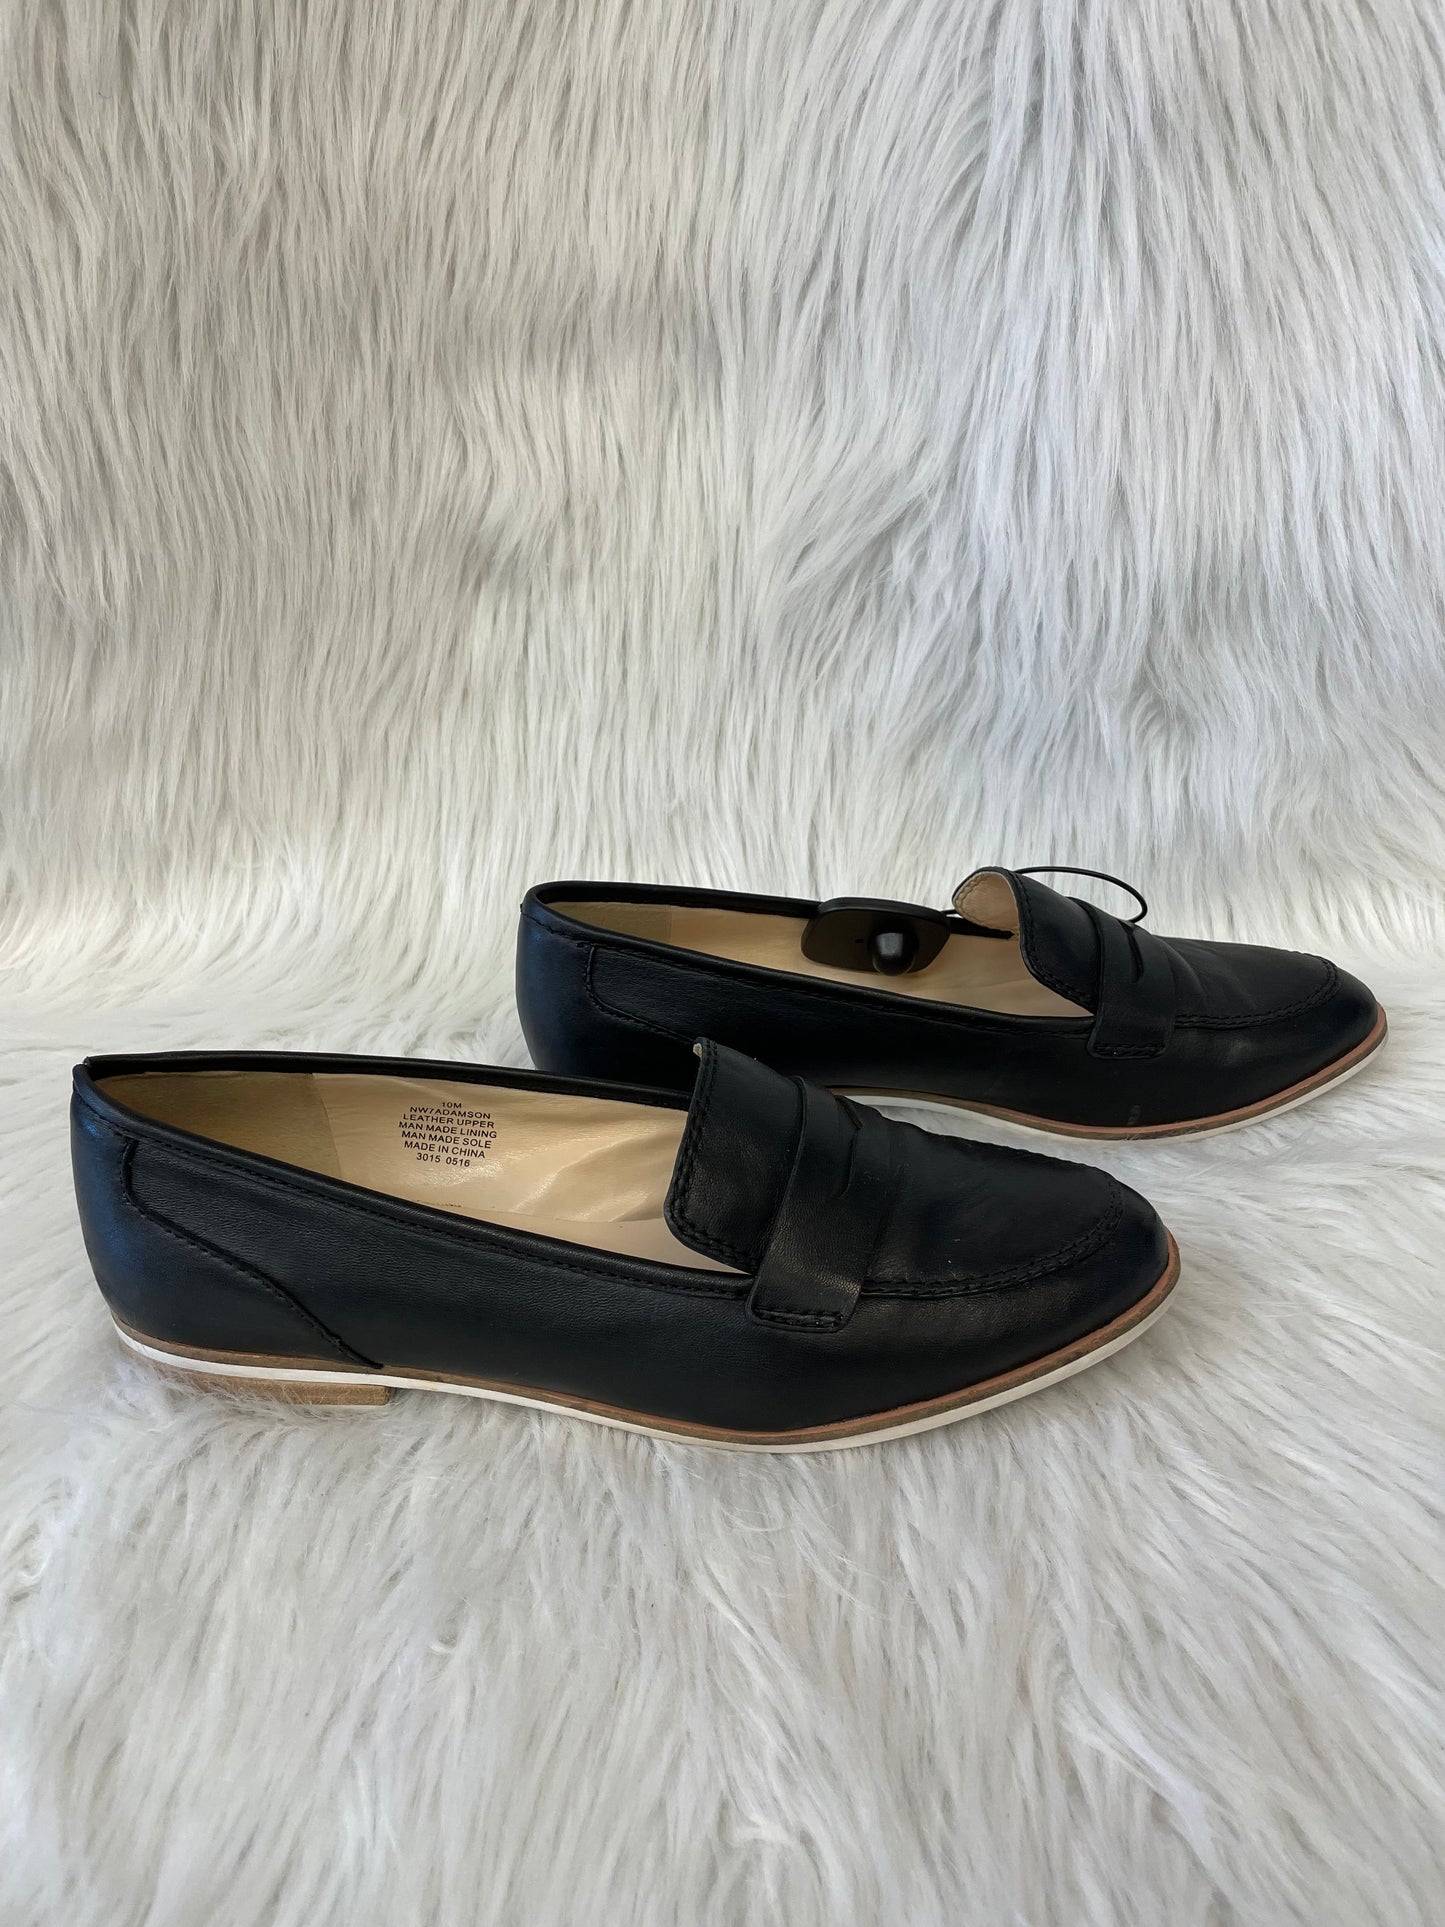 Black & Brown Shoes Flats Nine West, Size 10